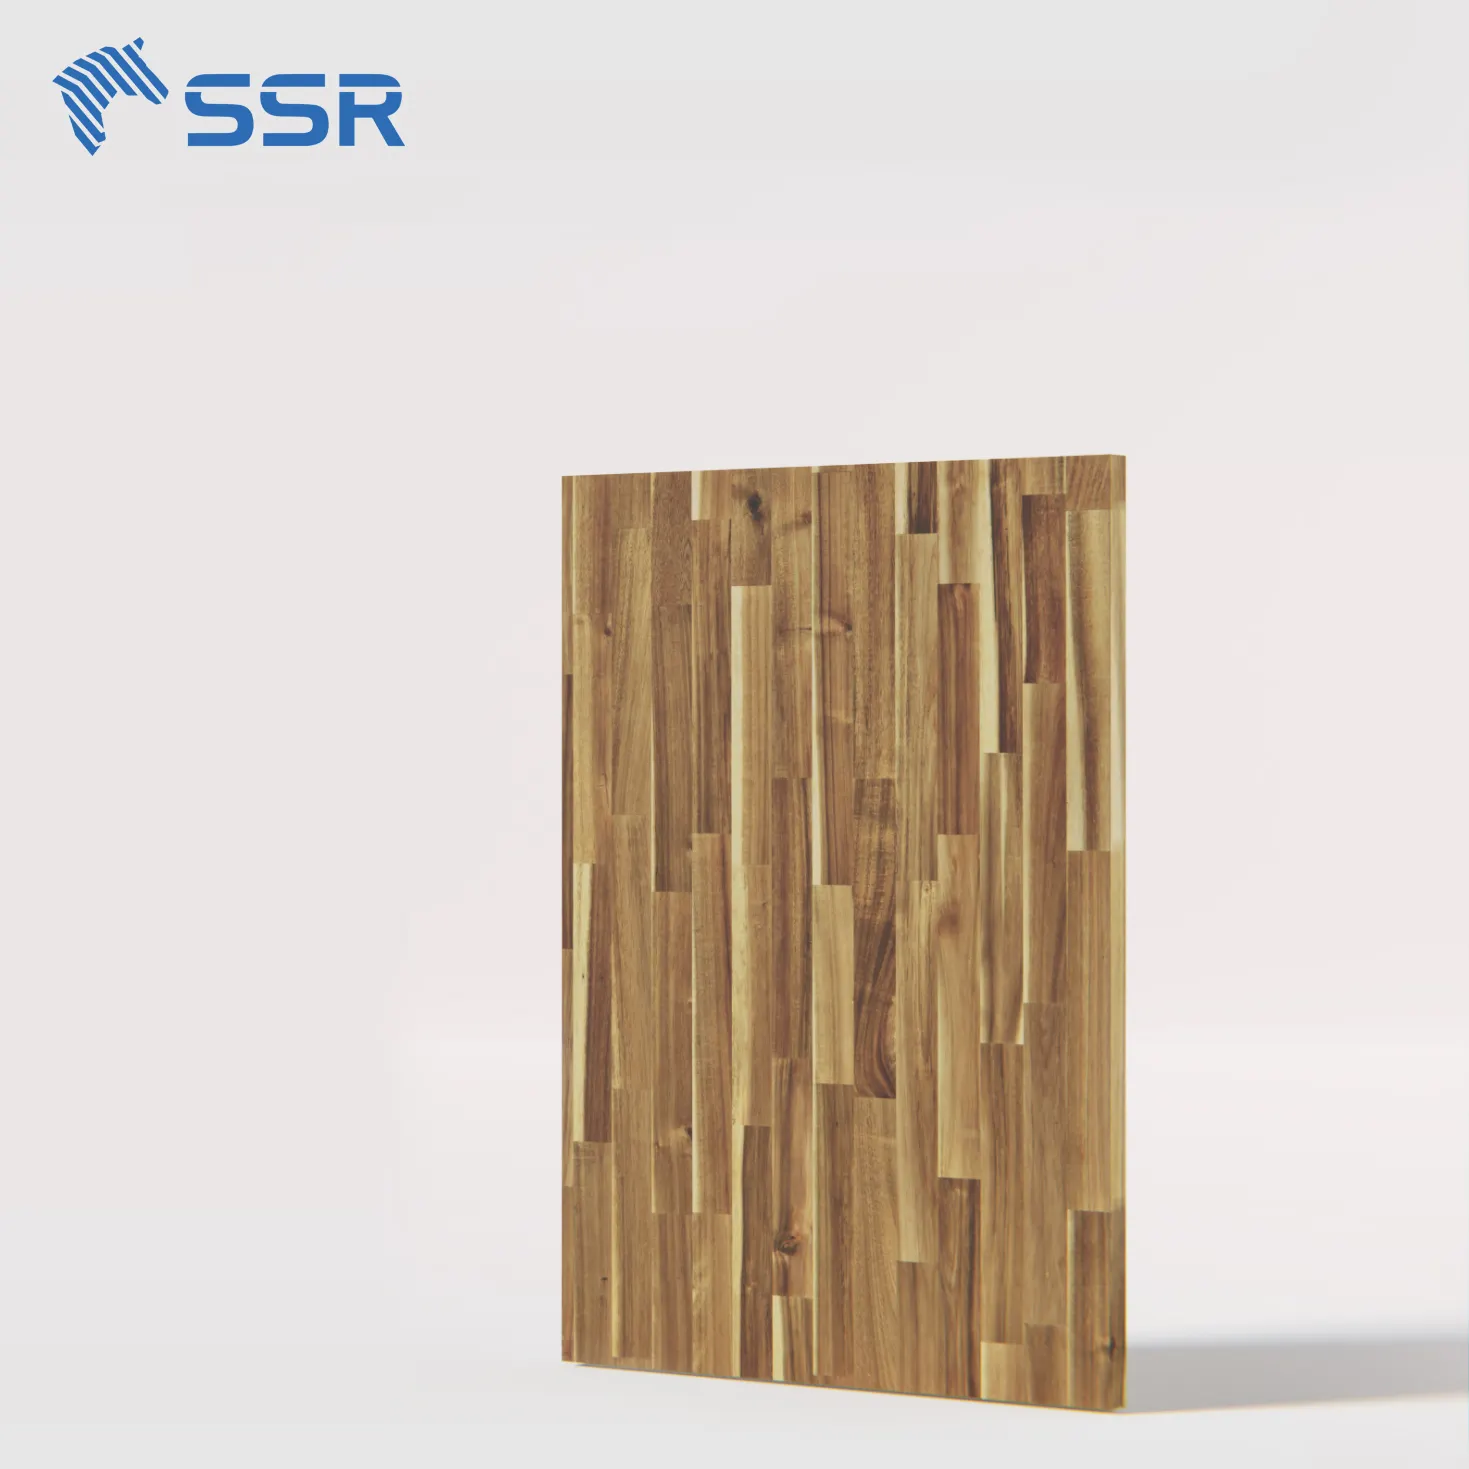 SSR VINA - Acacia Butcher Block Countertop - Oiled Finish Strict quality control acacia wood butcher block countertop